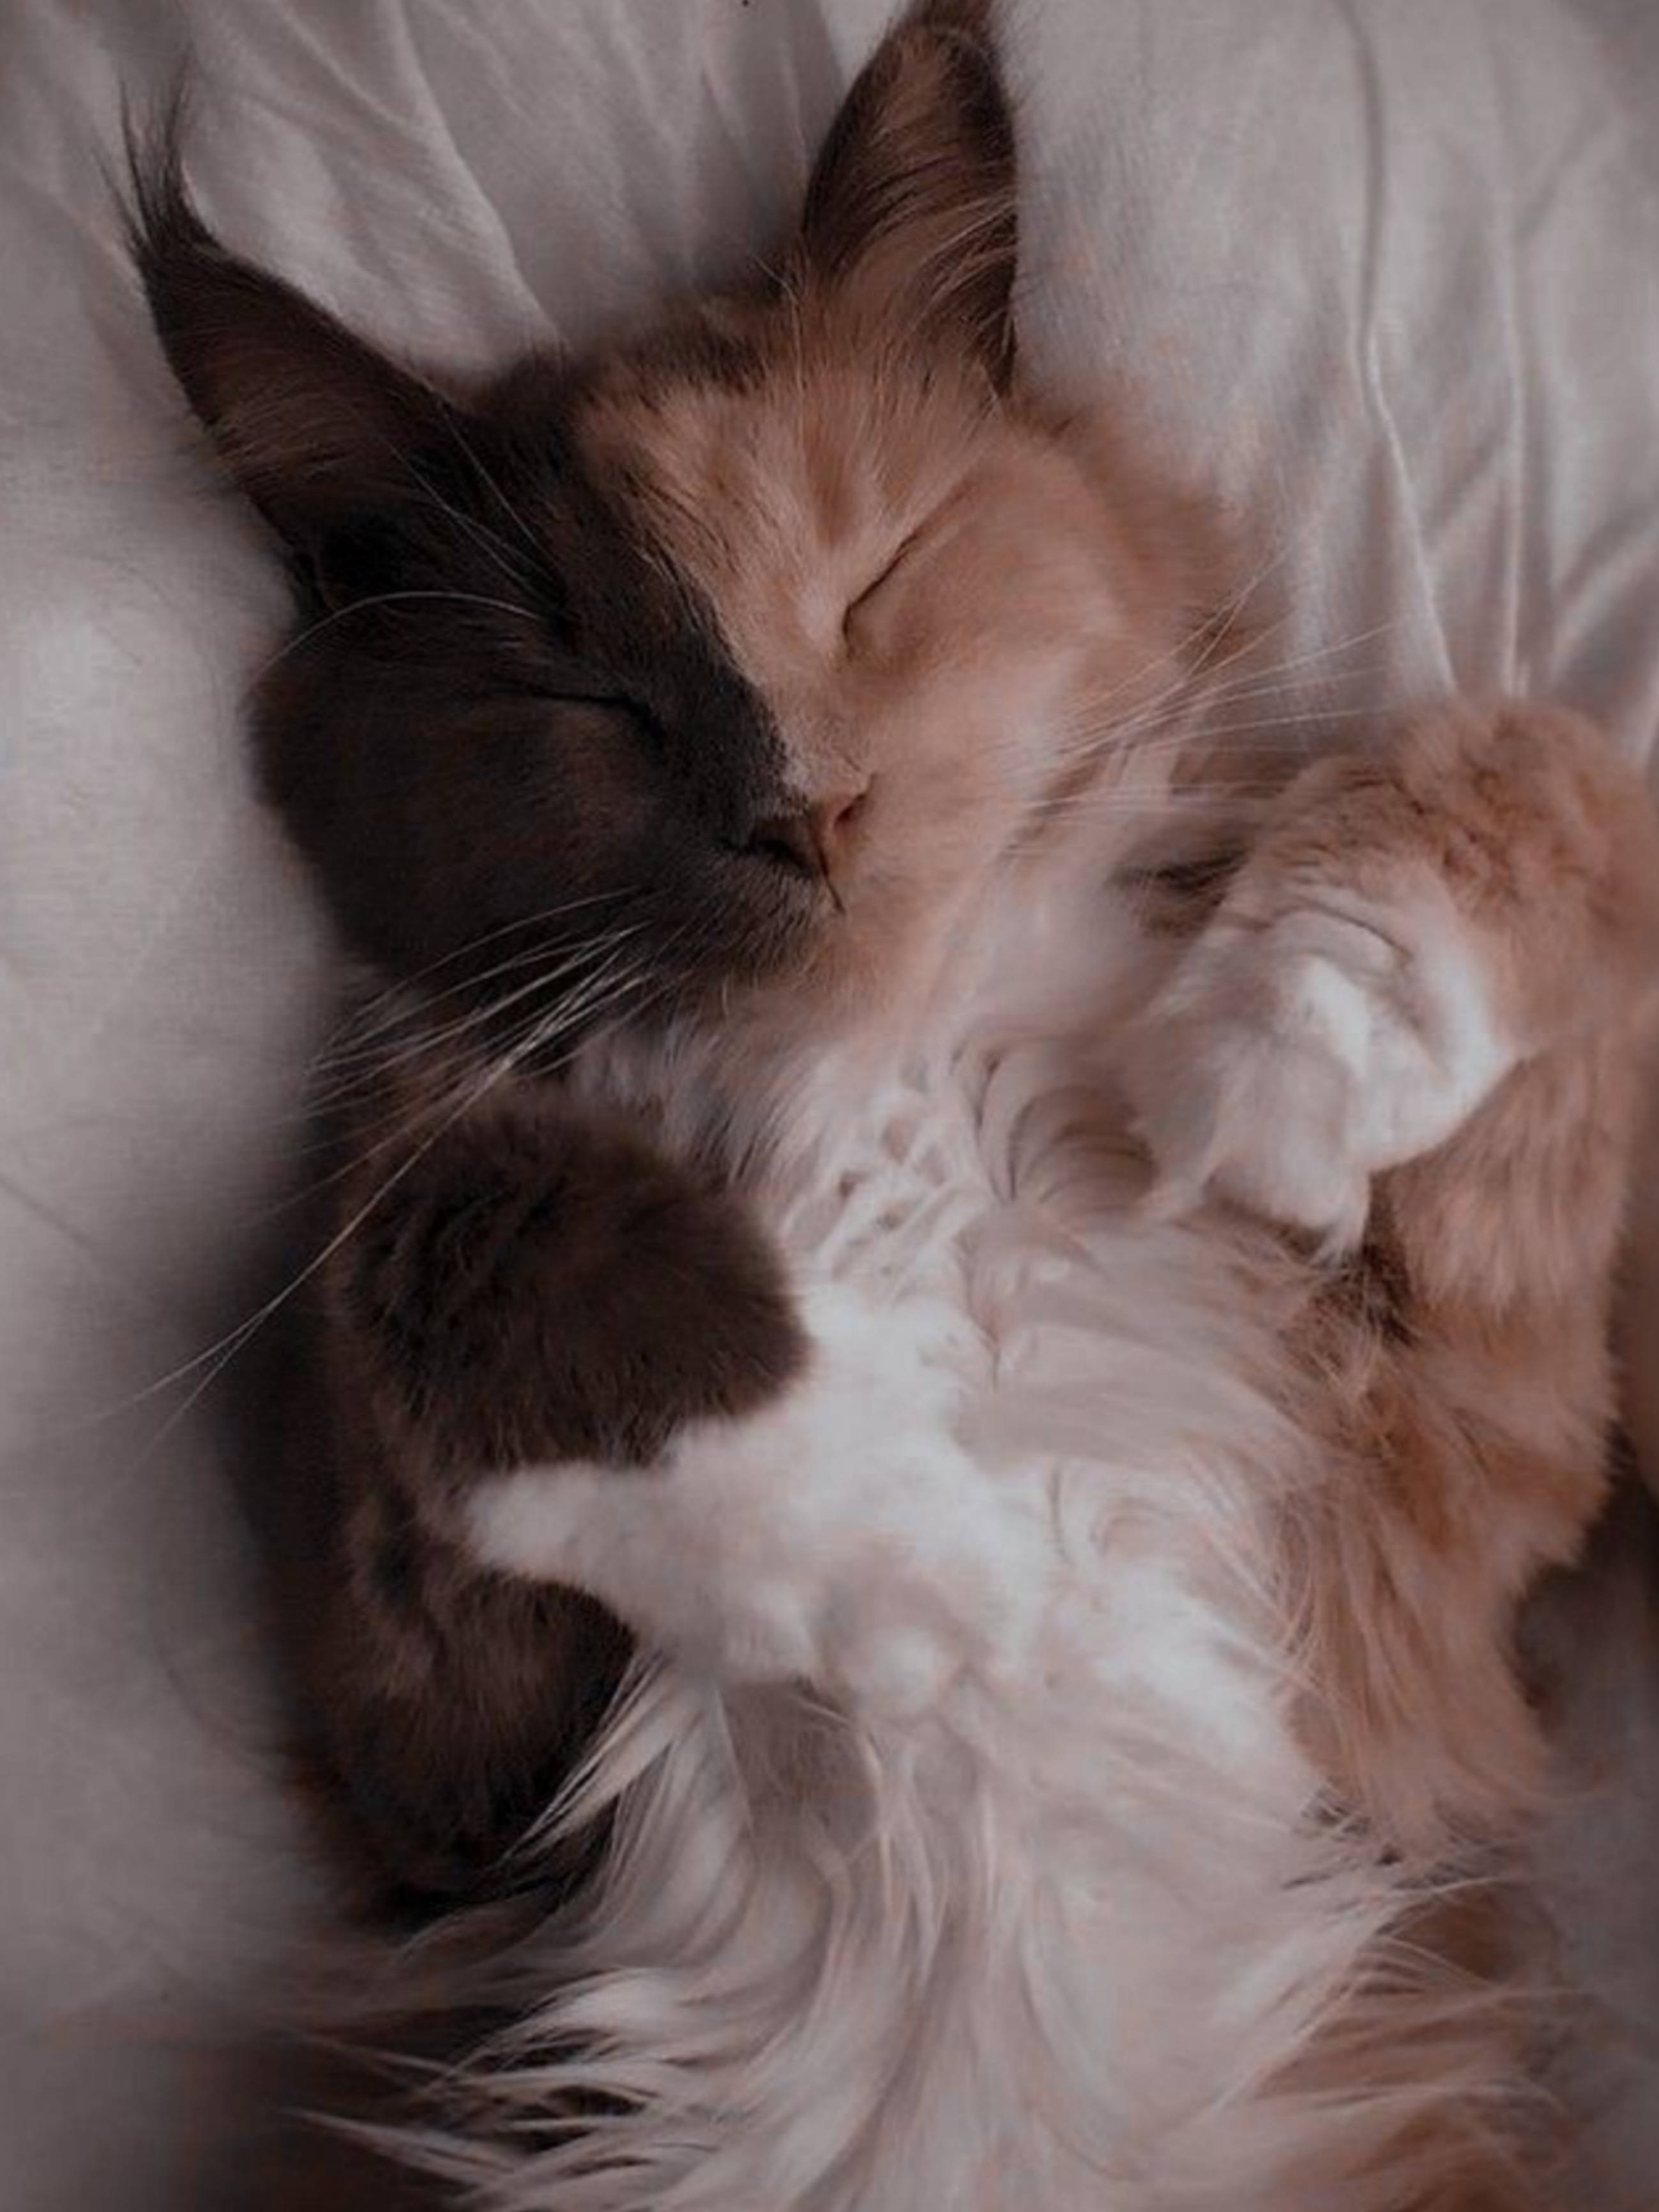 Download Sleeping Cute Cat Aesthetic Wallpaper | Wallpapers.com